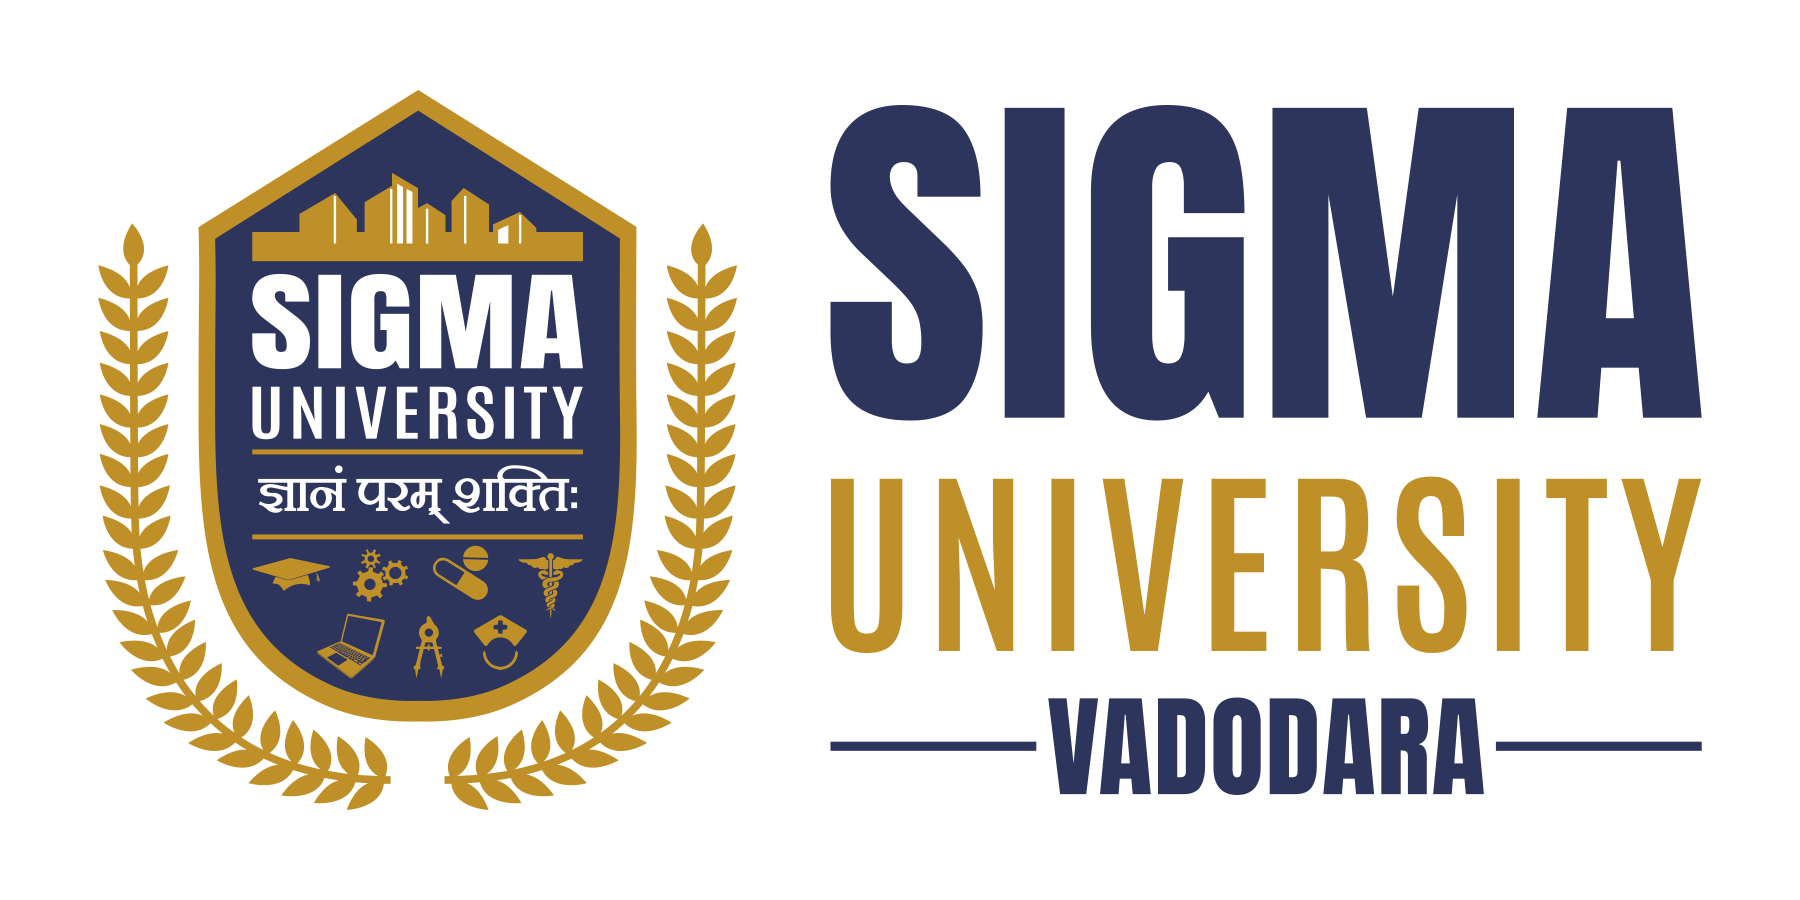 Sigma University - Vadodara